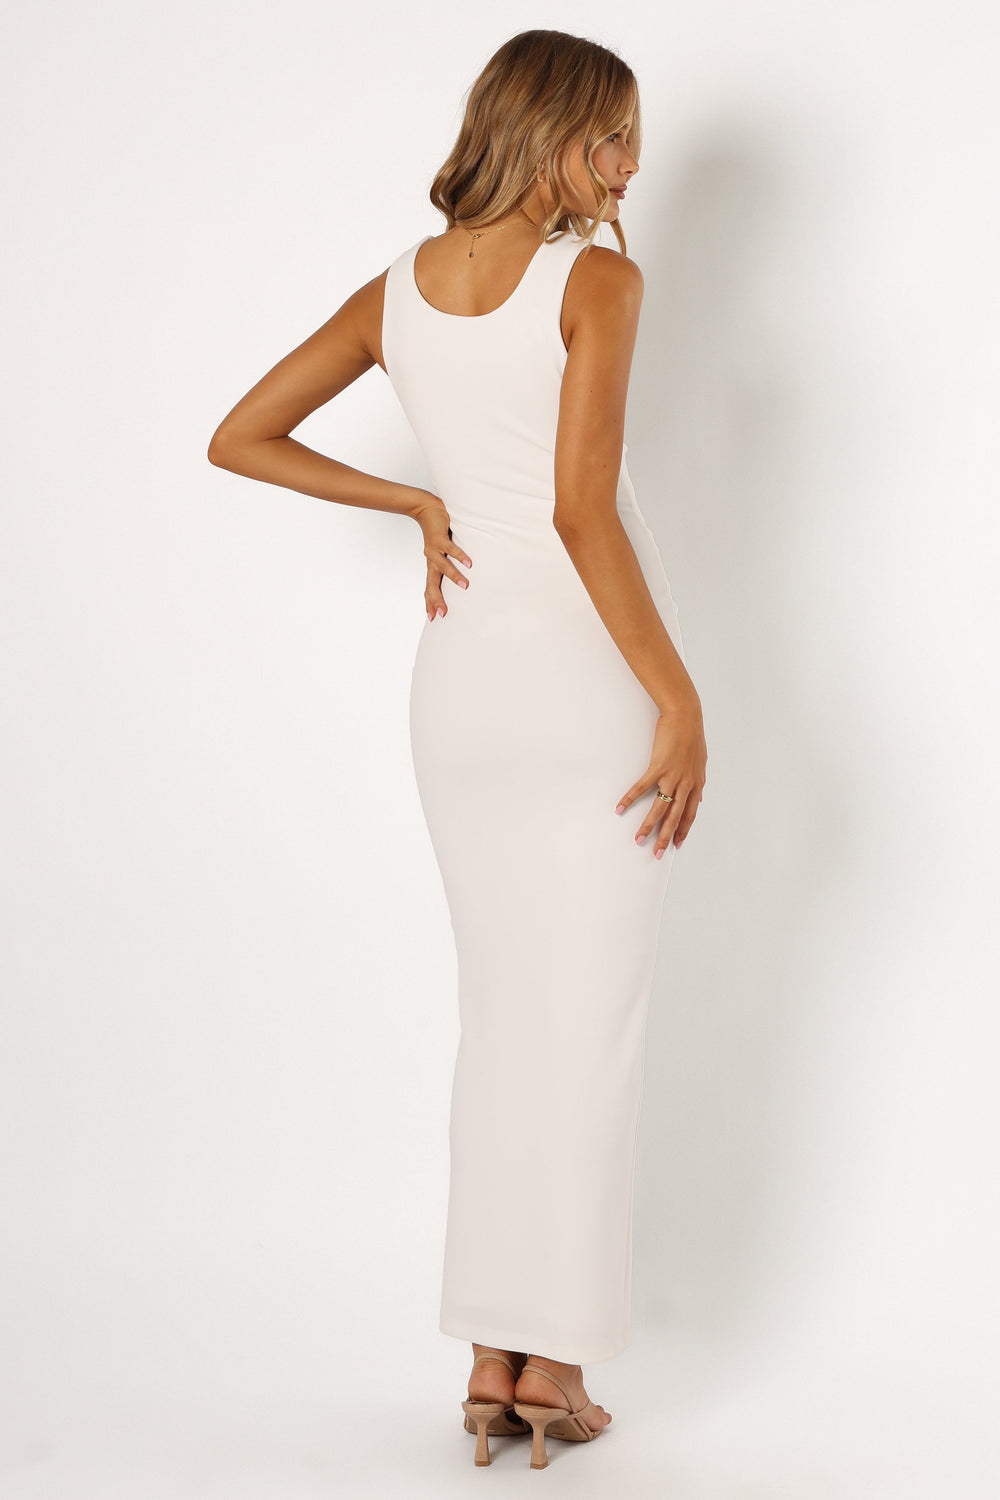 Shop Formal Dress - Zariah Dress - White fourth image